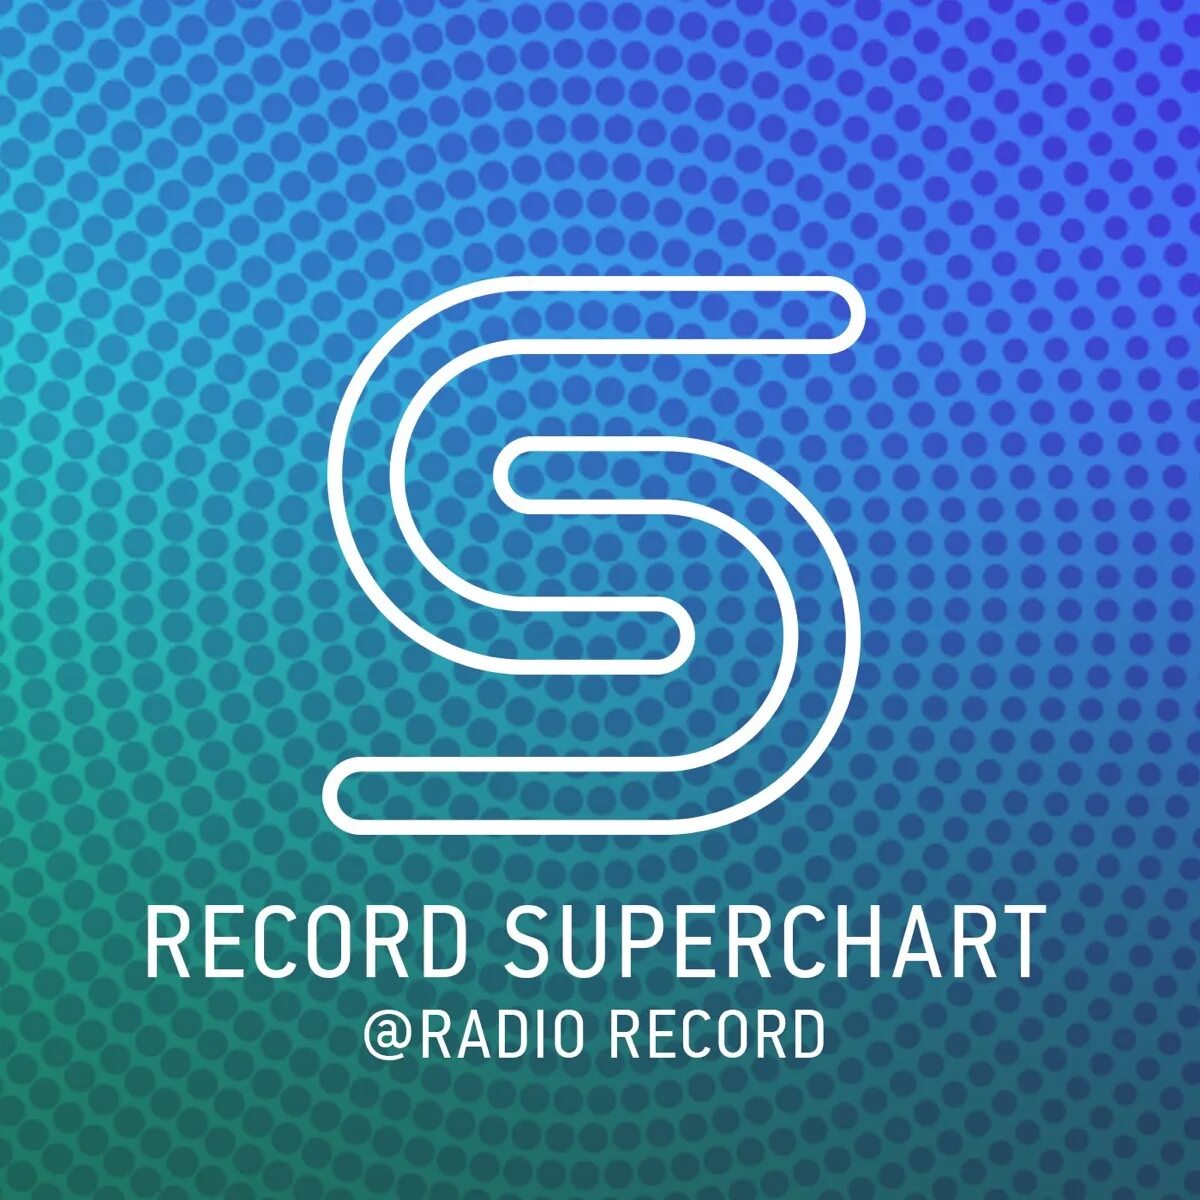 Радио рекорд супер. Рекорд Суперчарт. Radio record record Superchart. Радио рекорд - итоговый Суперчарт. Супер рекорды.